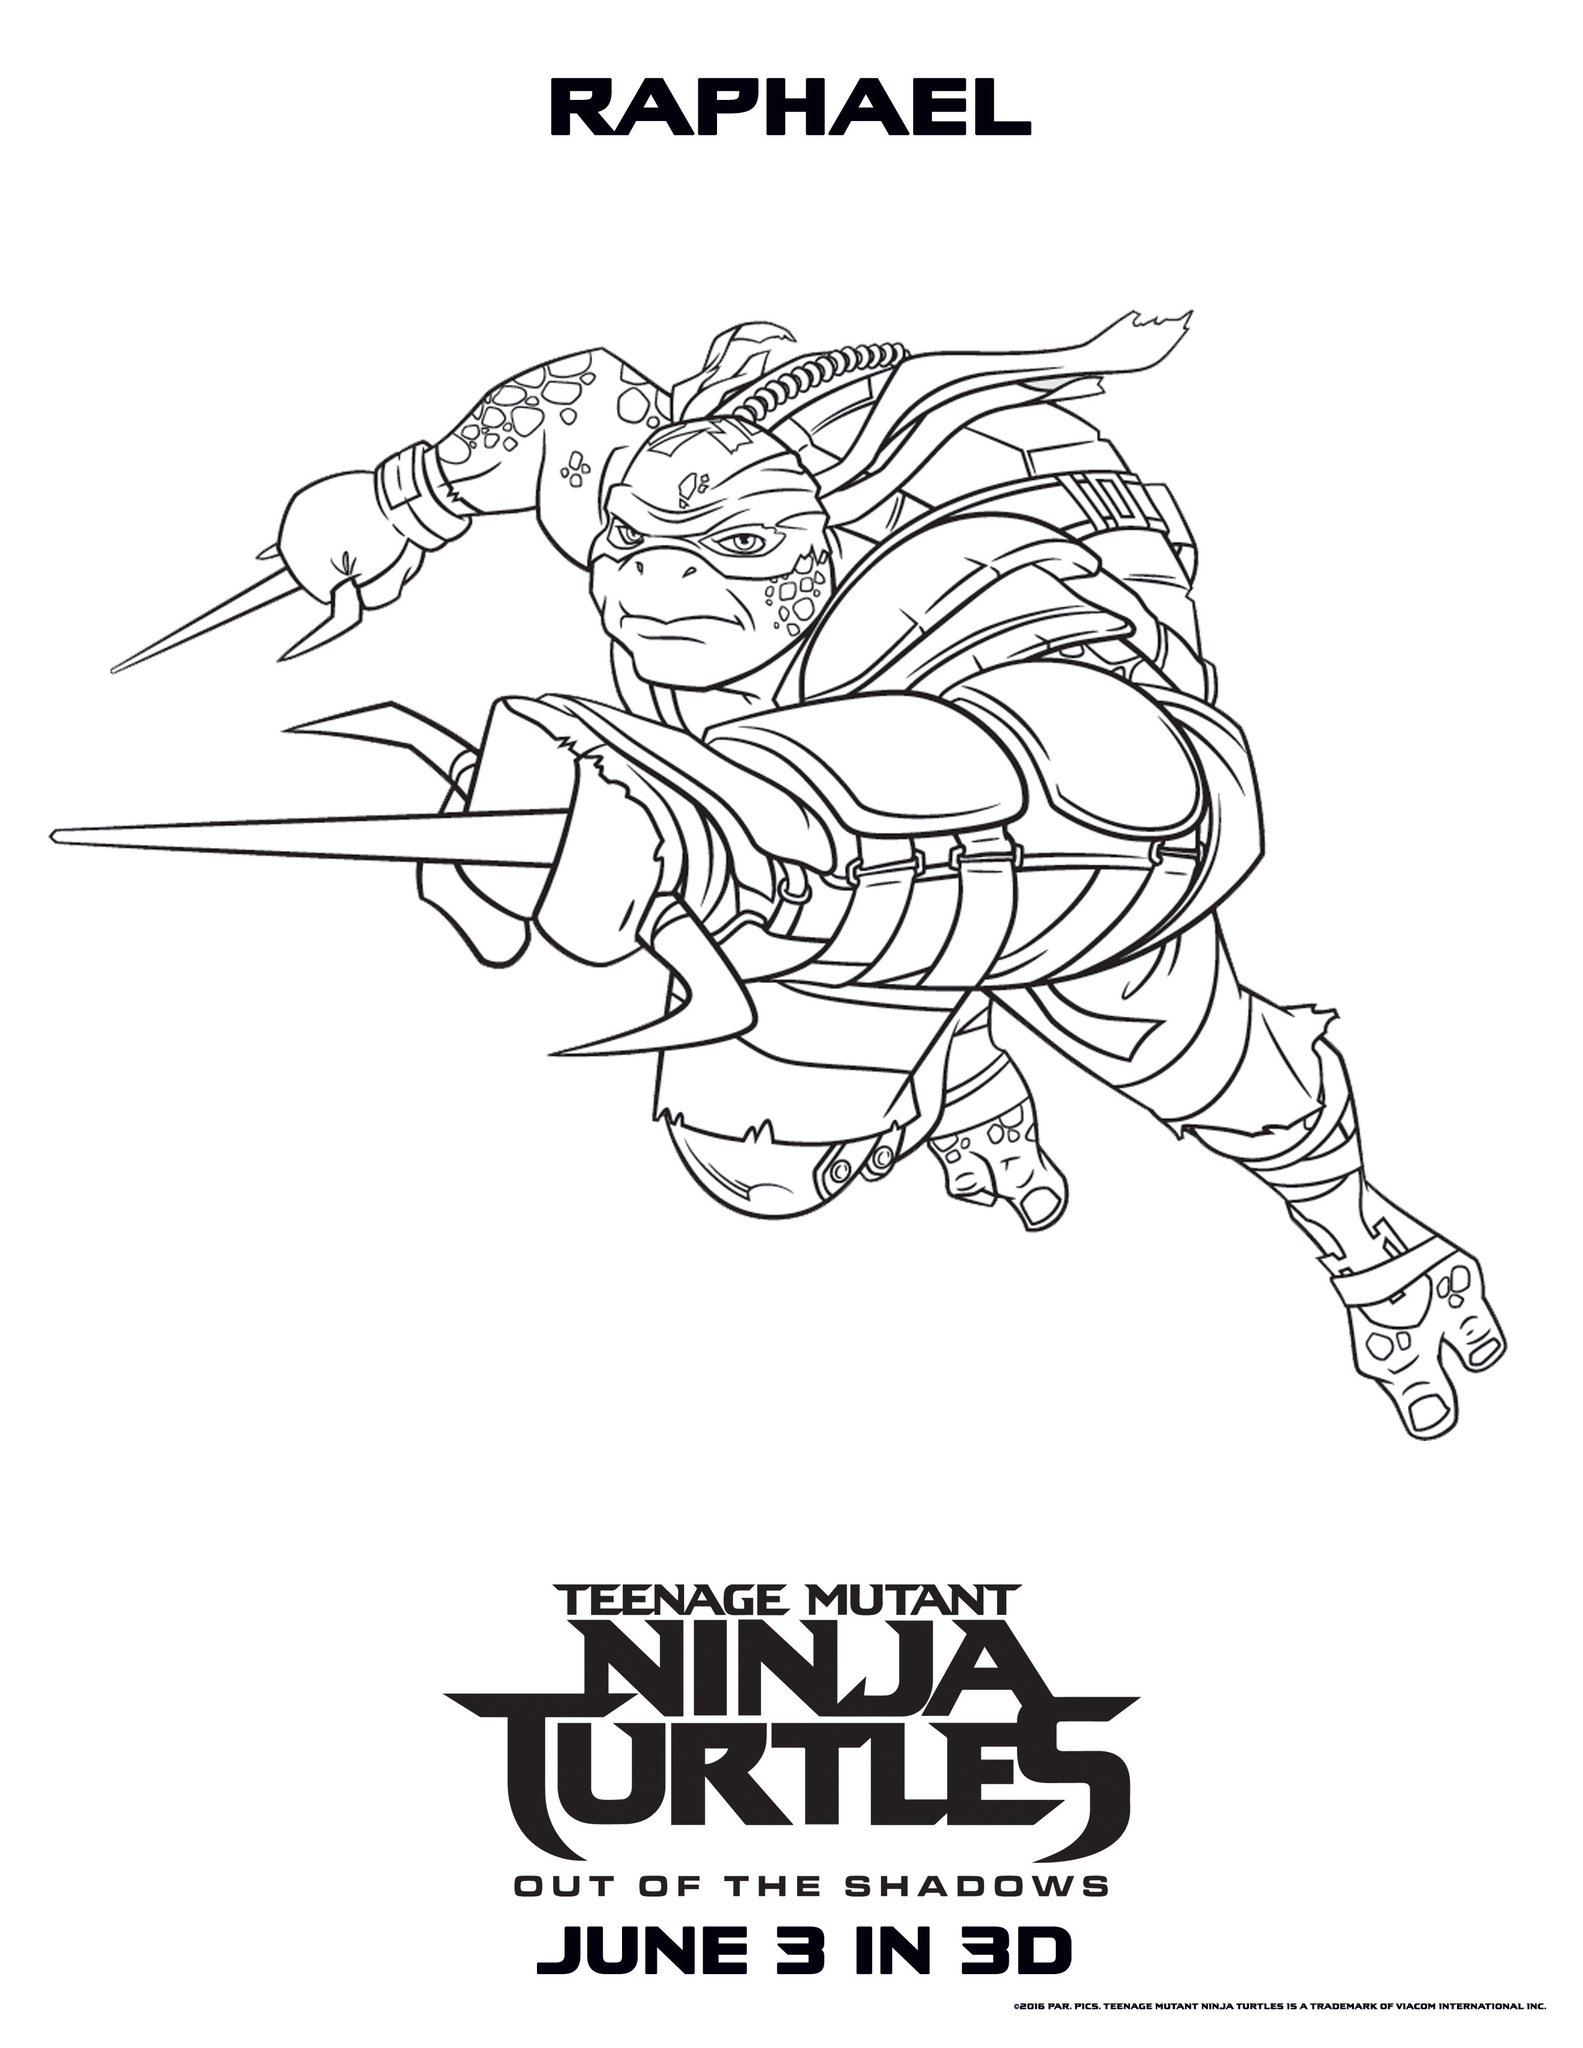 Teenage mutant ninja turtles coloring pages